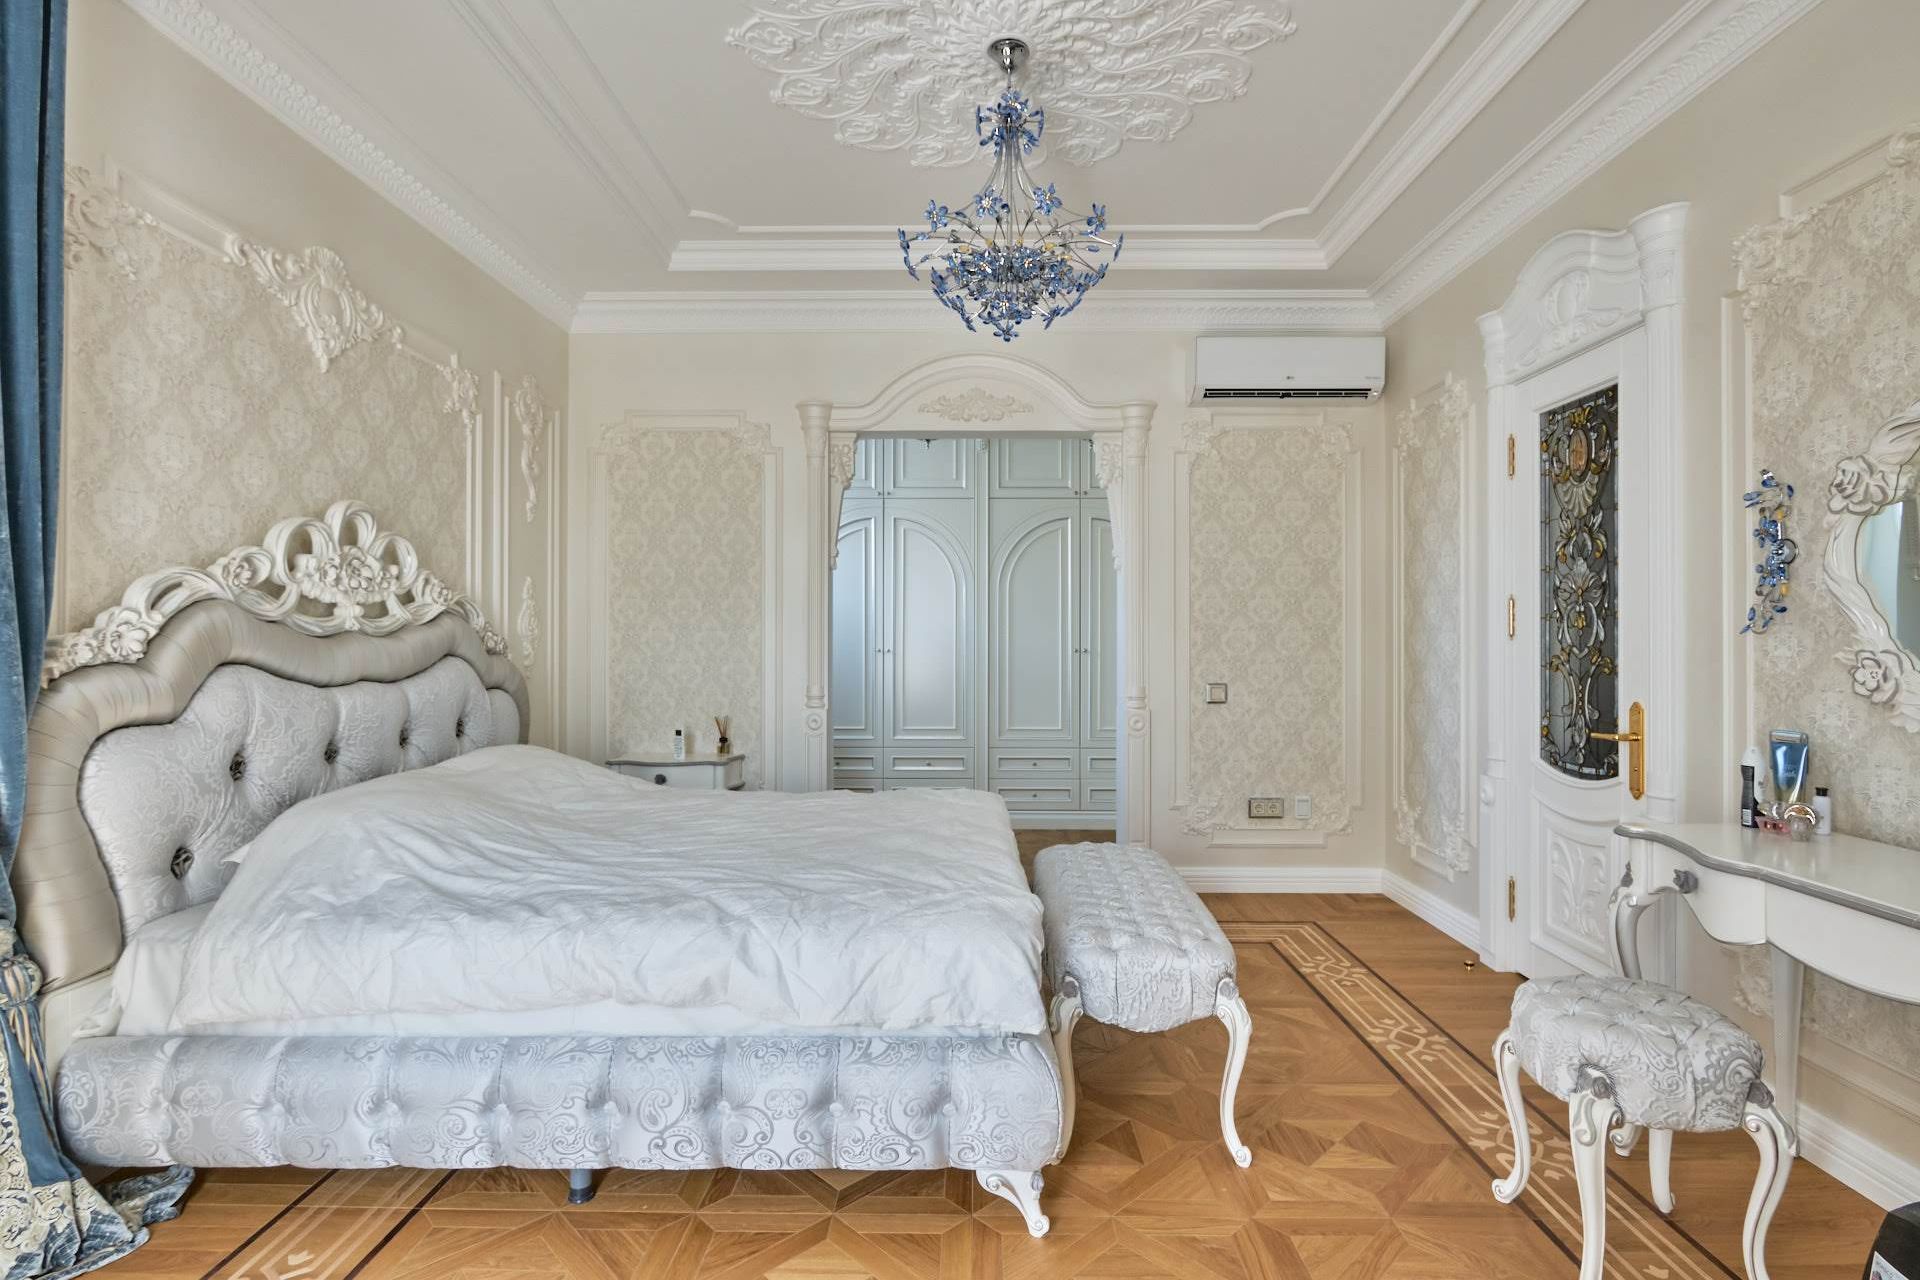 Bedroom design in classic style